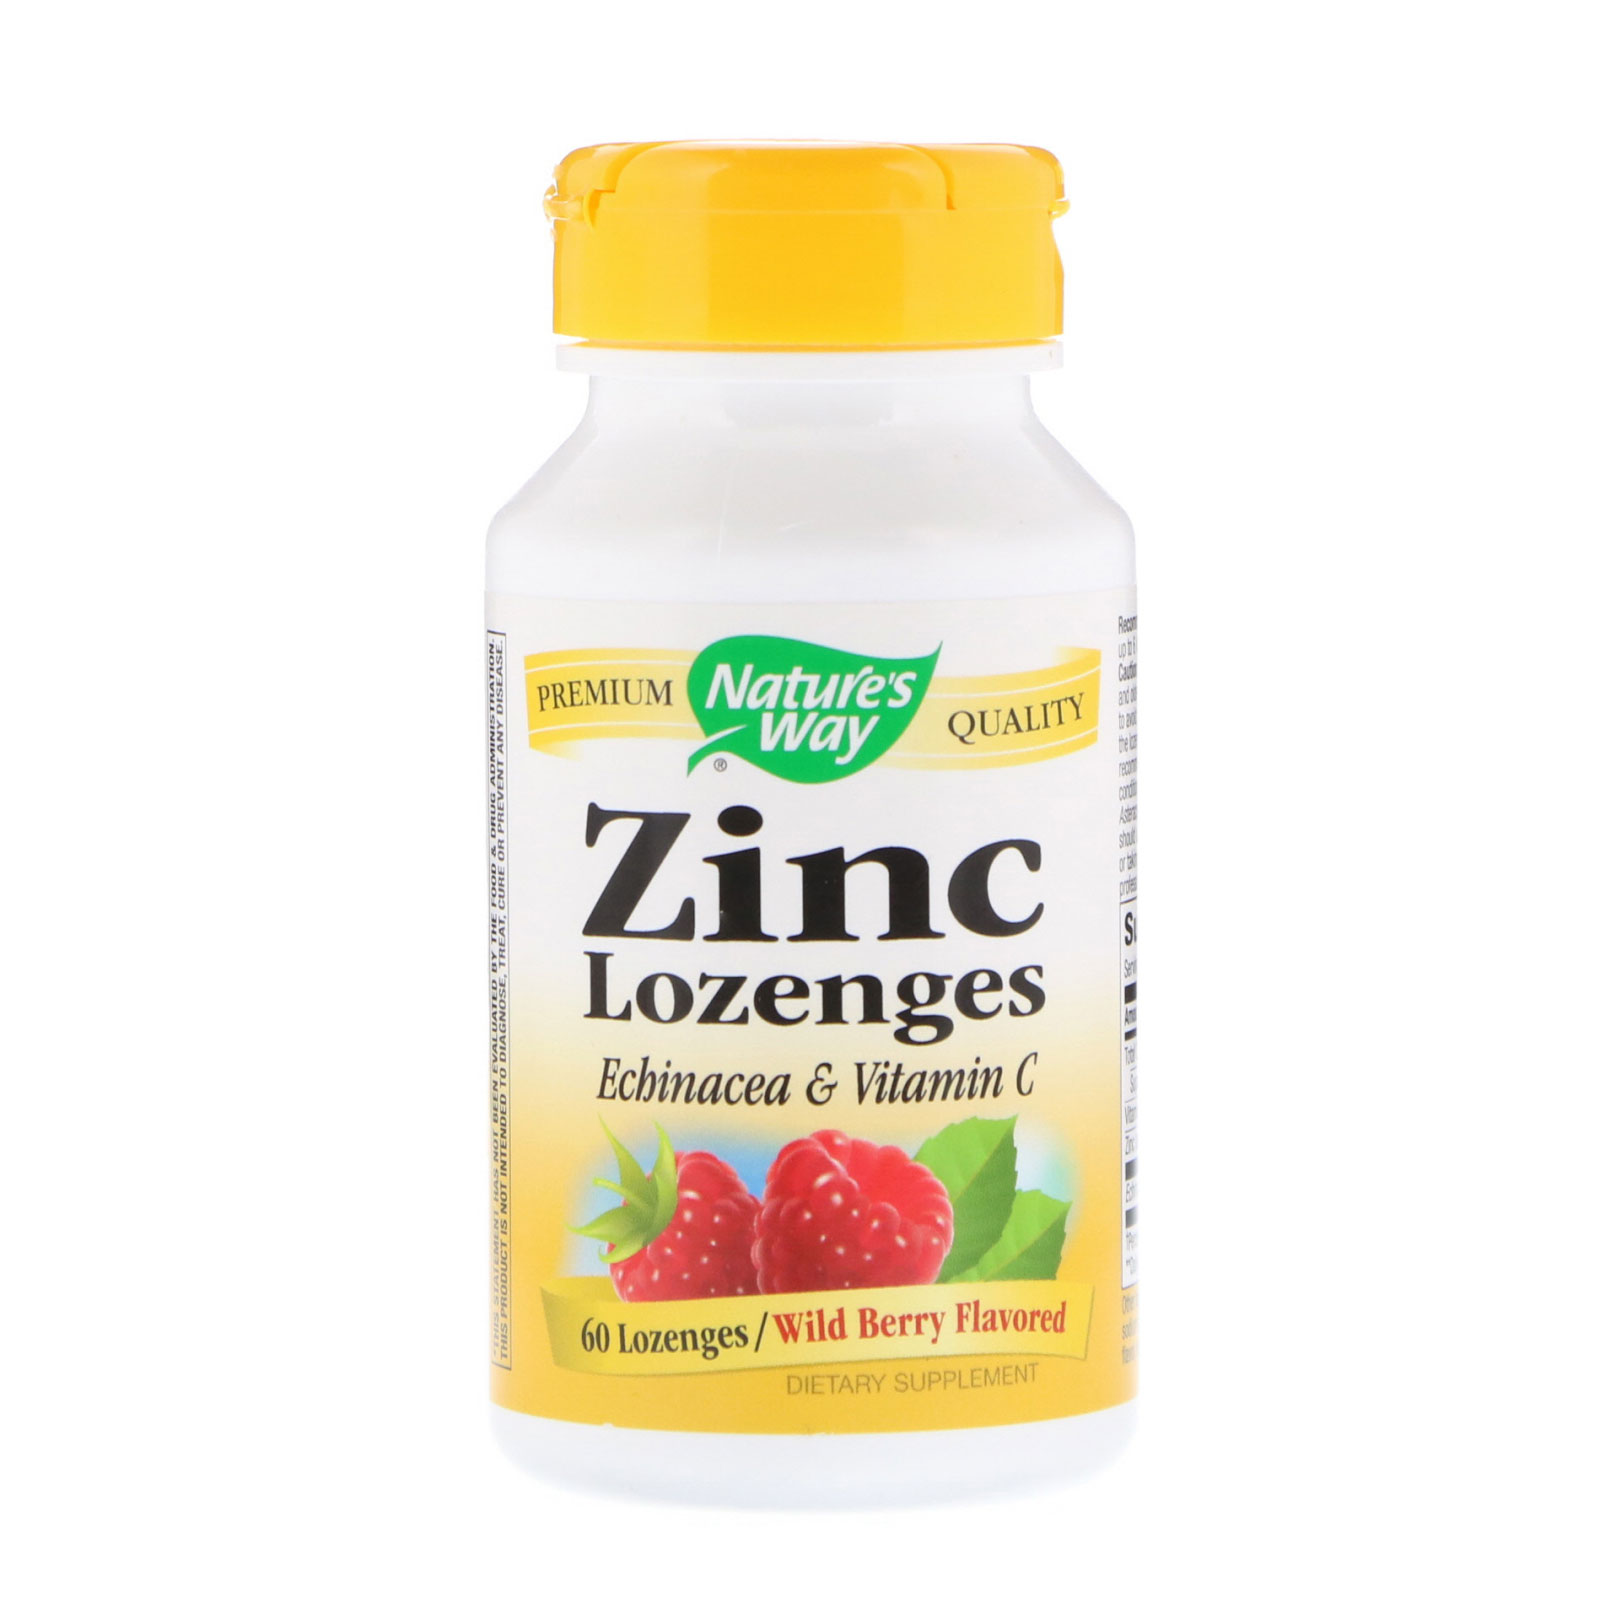 zinc lozenges, wild berry flavored, 60 lozenges